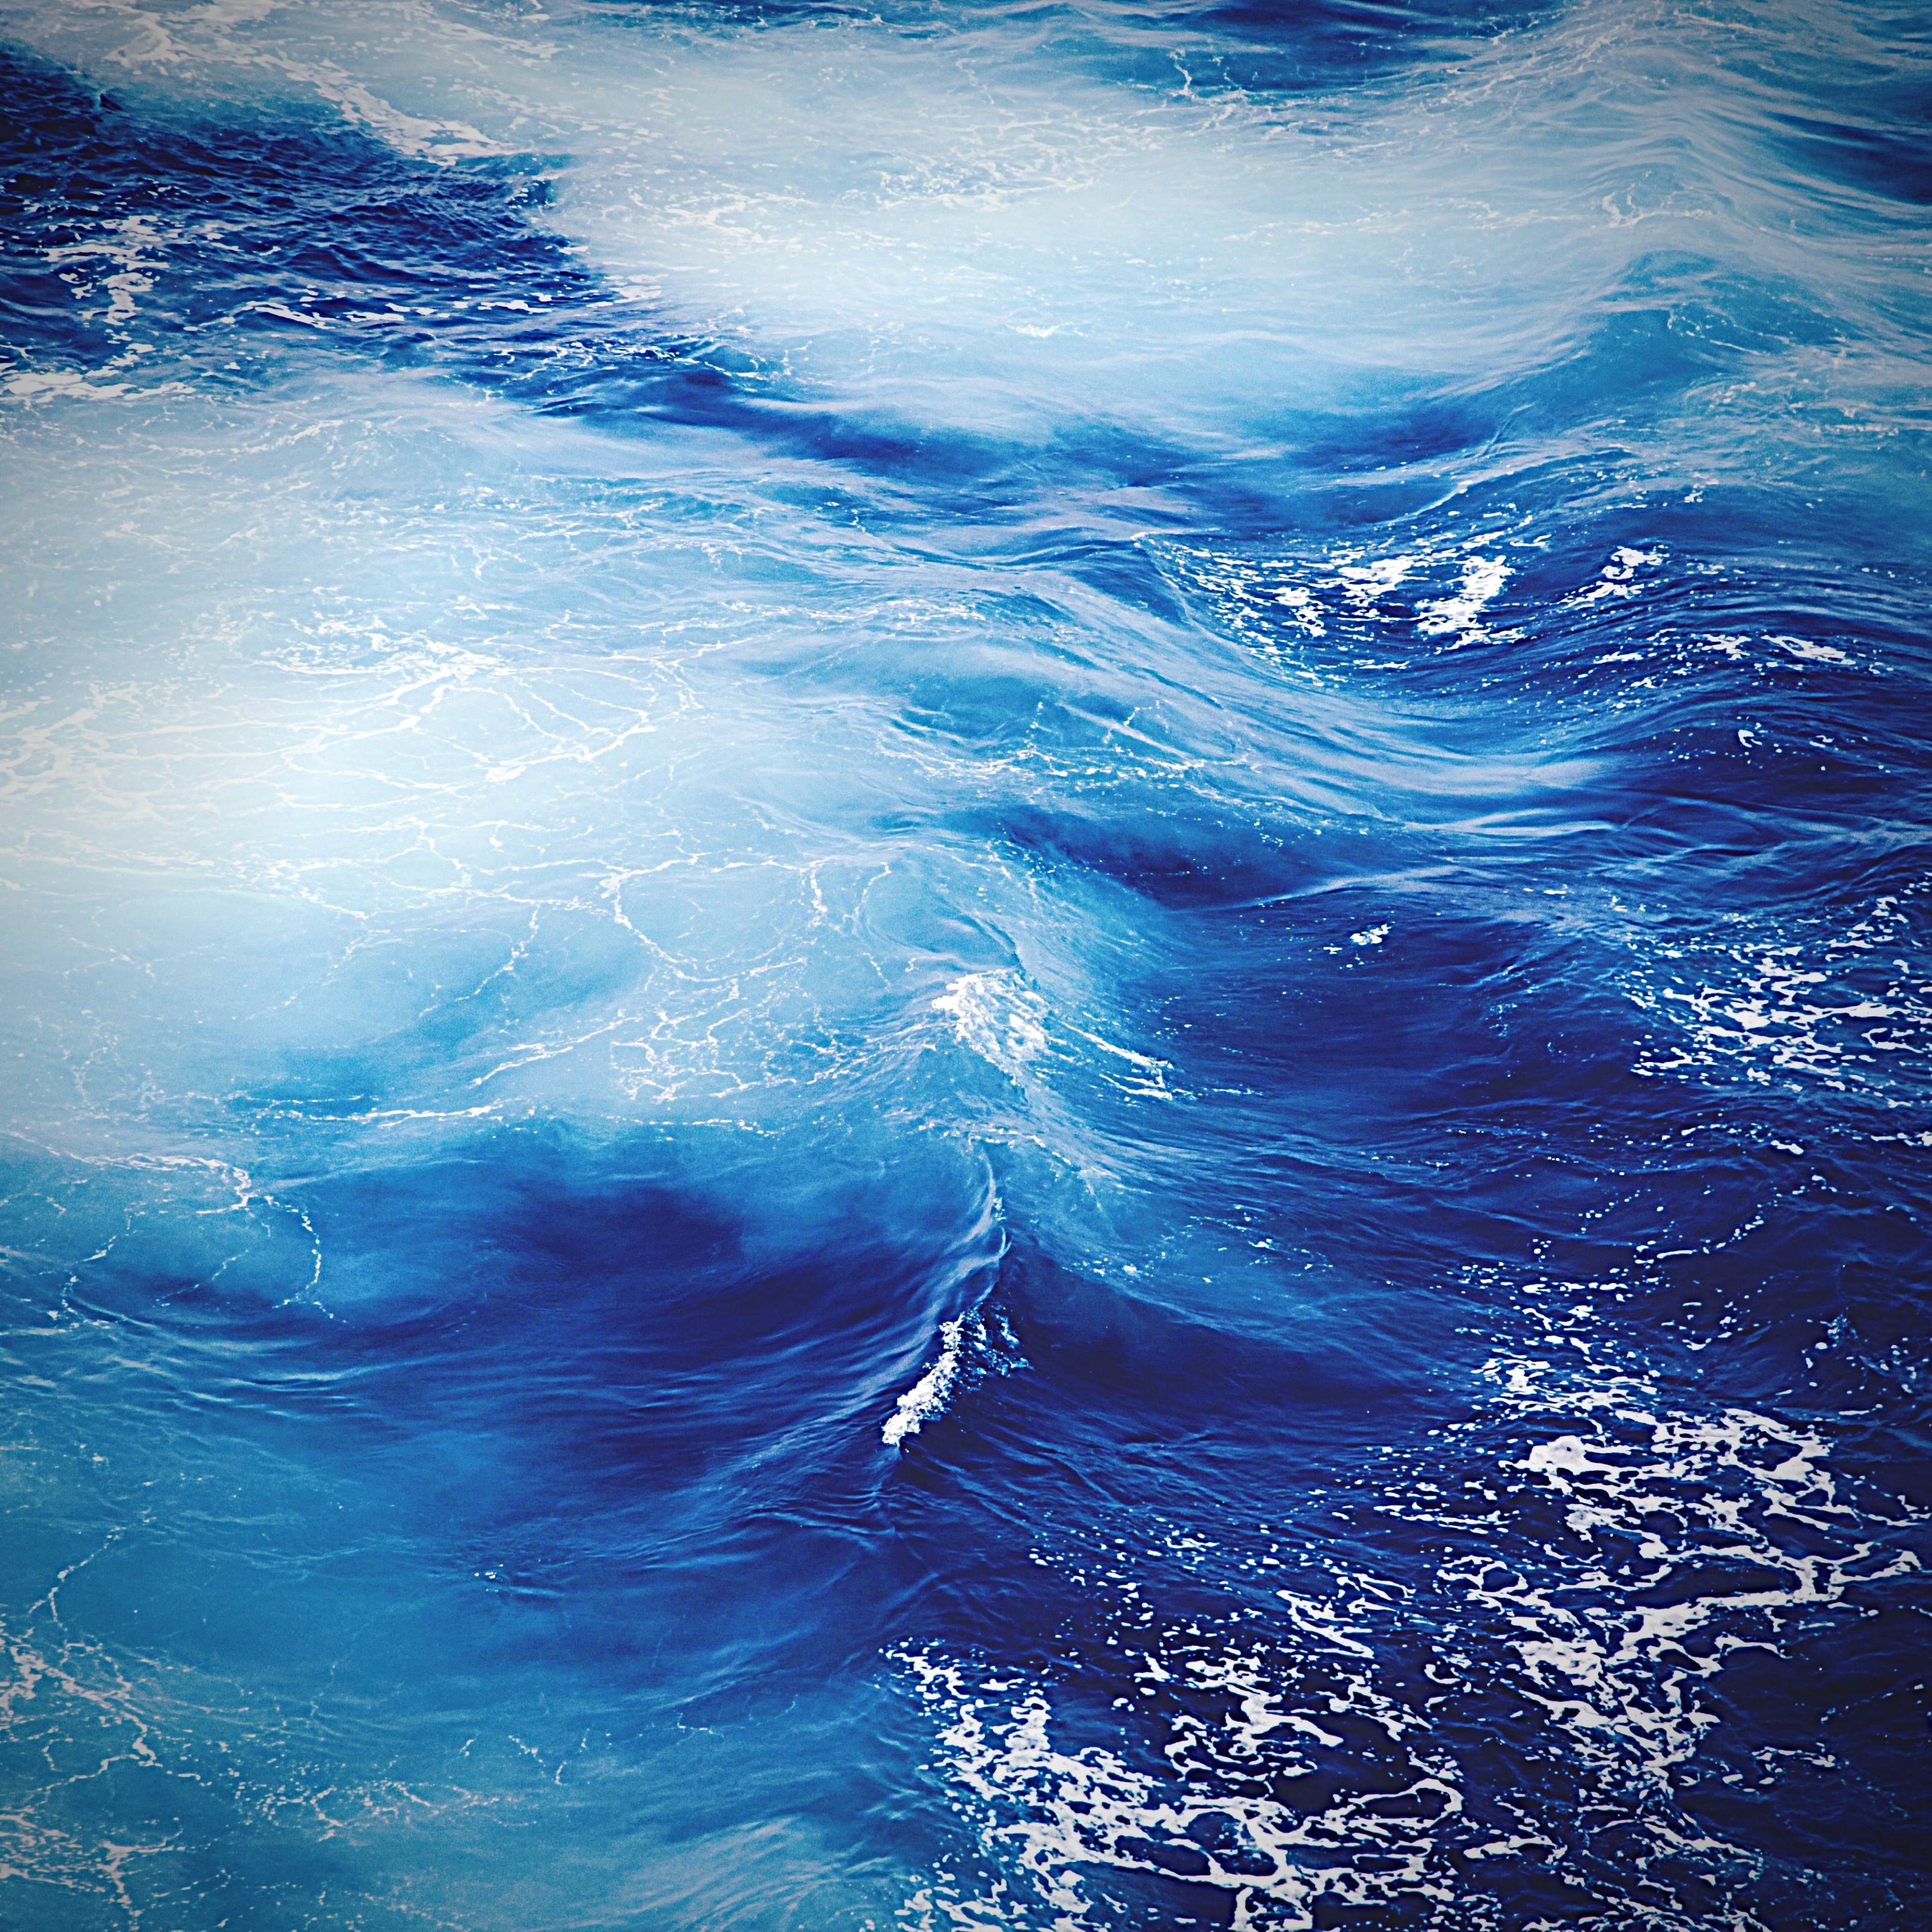 iPad Wallpapers Ocean Sea Water Wave Blue iPad Wallpaper 3208x3208 px